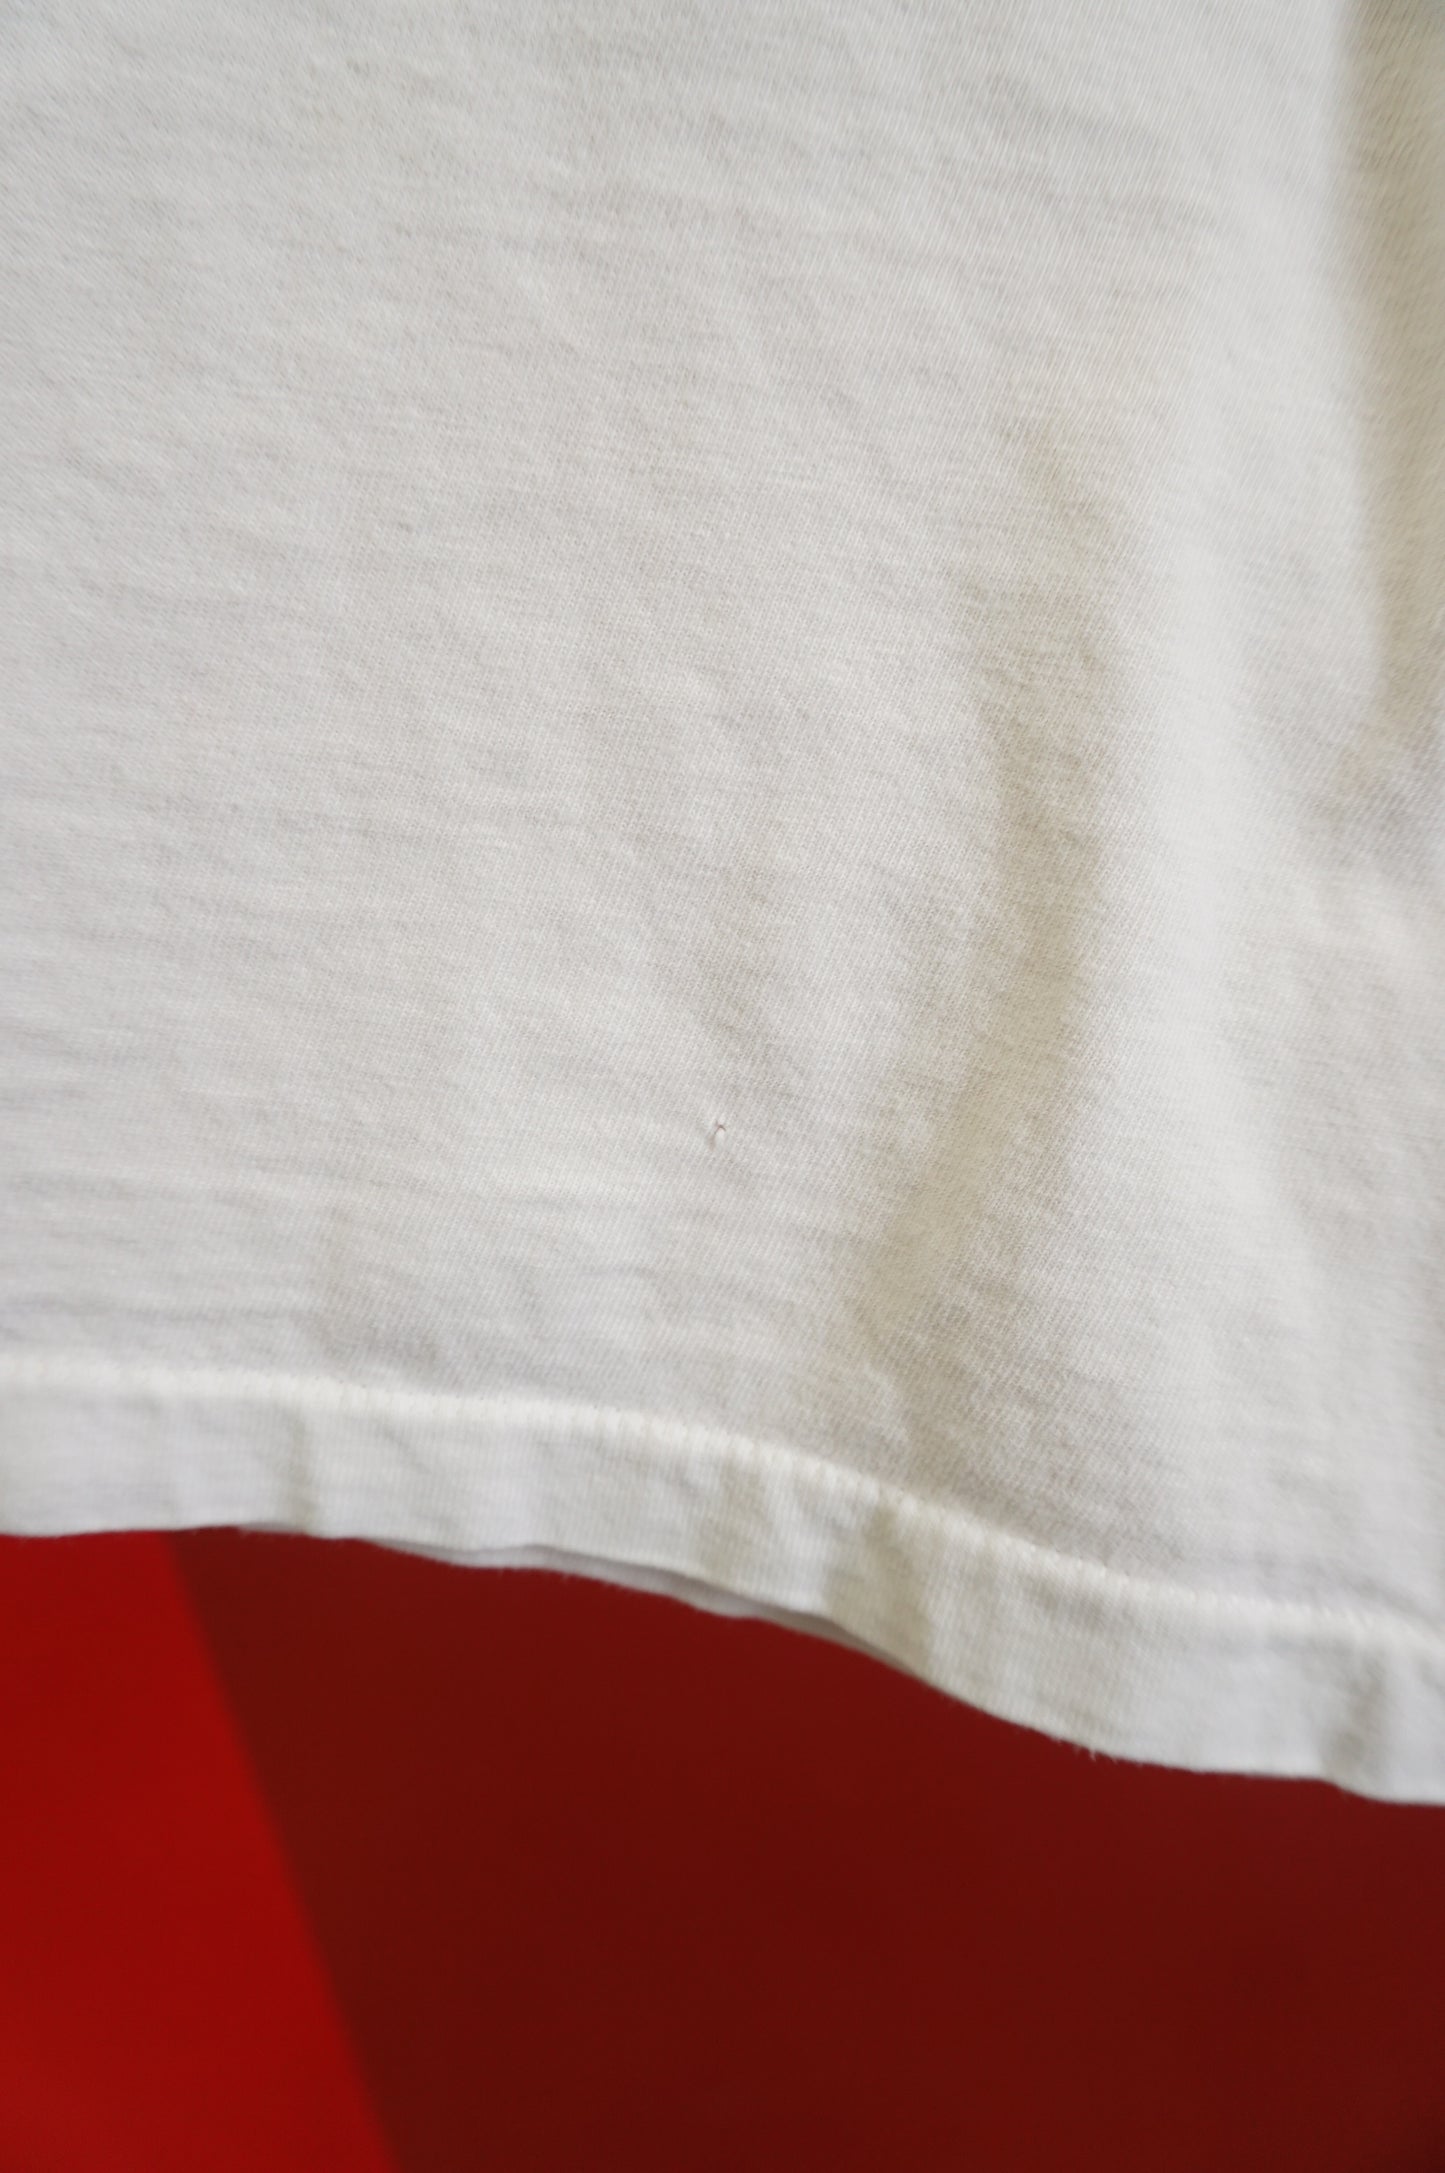 (L) USA Made Tommy Hilfiger Big Logo Single Stitch T-Shirt